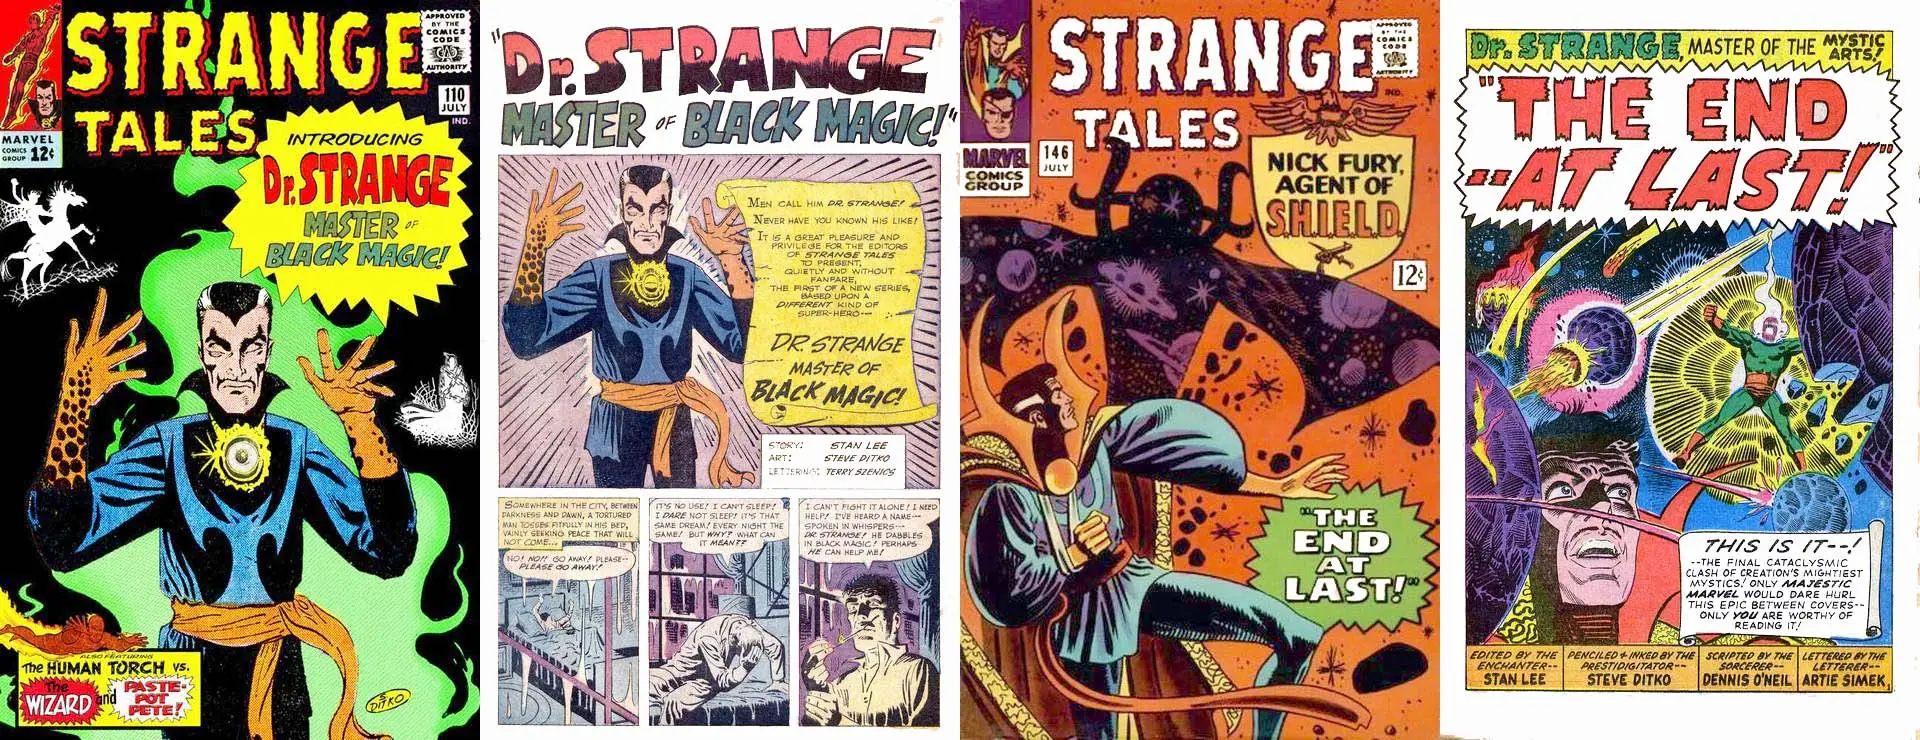 the first doctor strange story strange tales 110